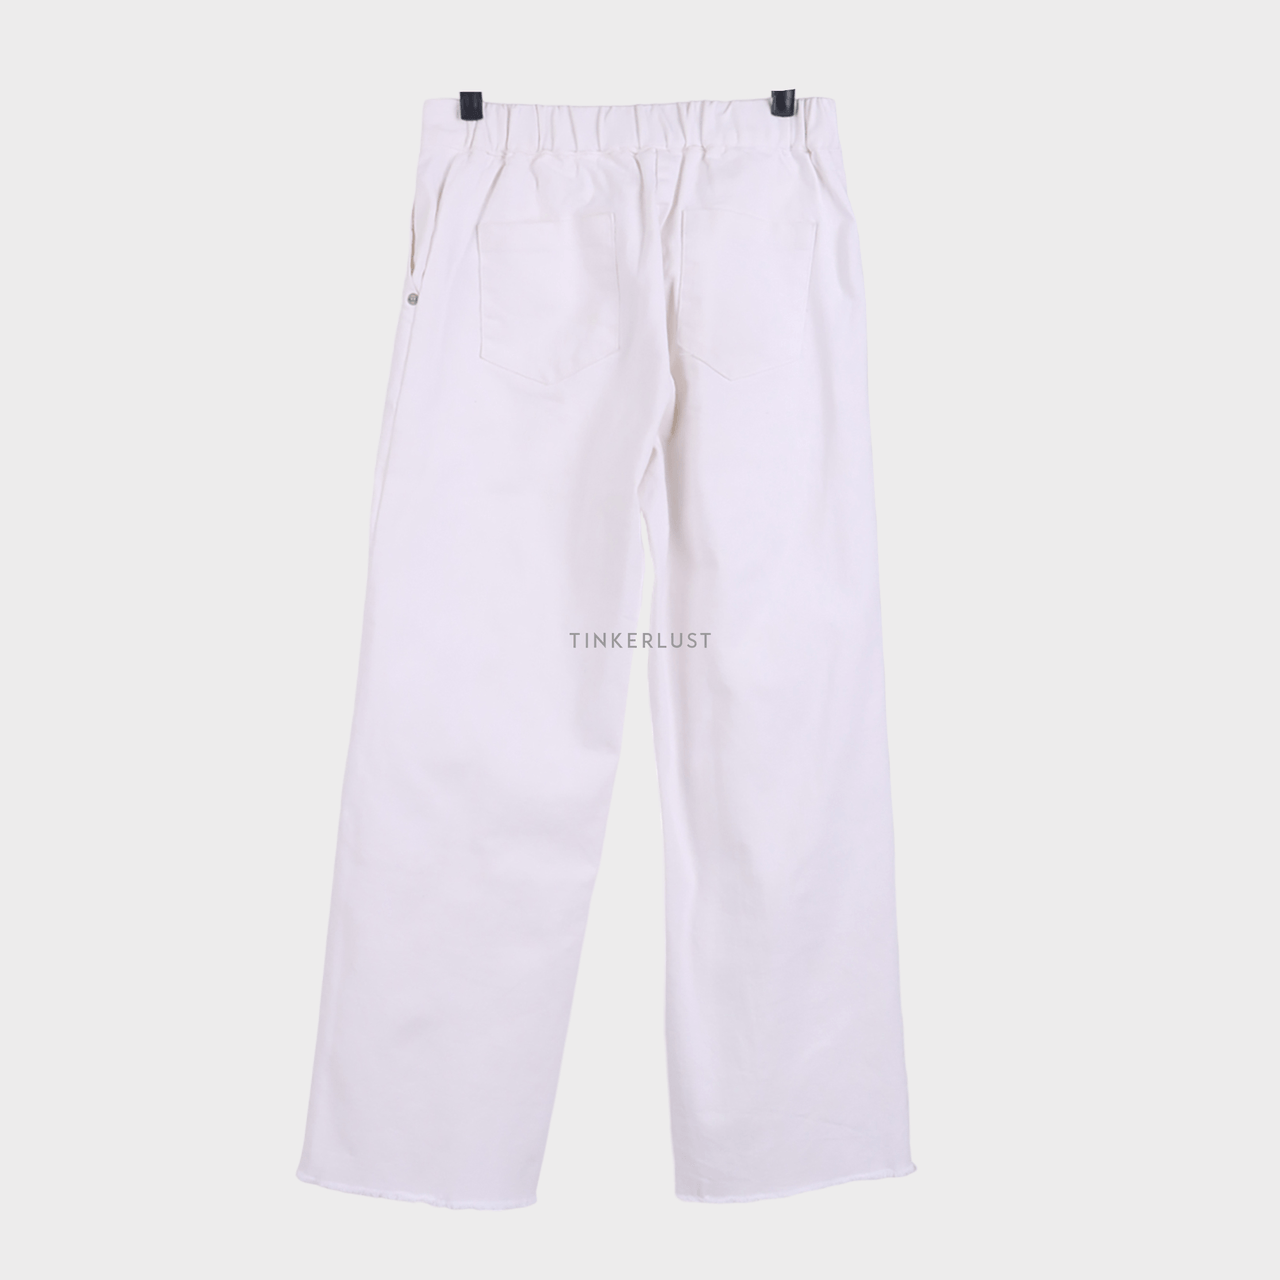 Oak + Fort White Long Pants